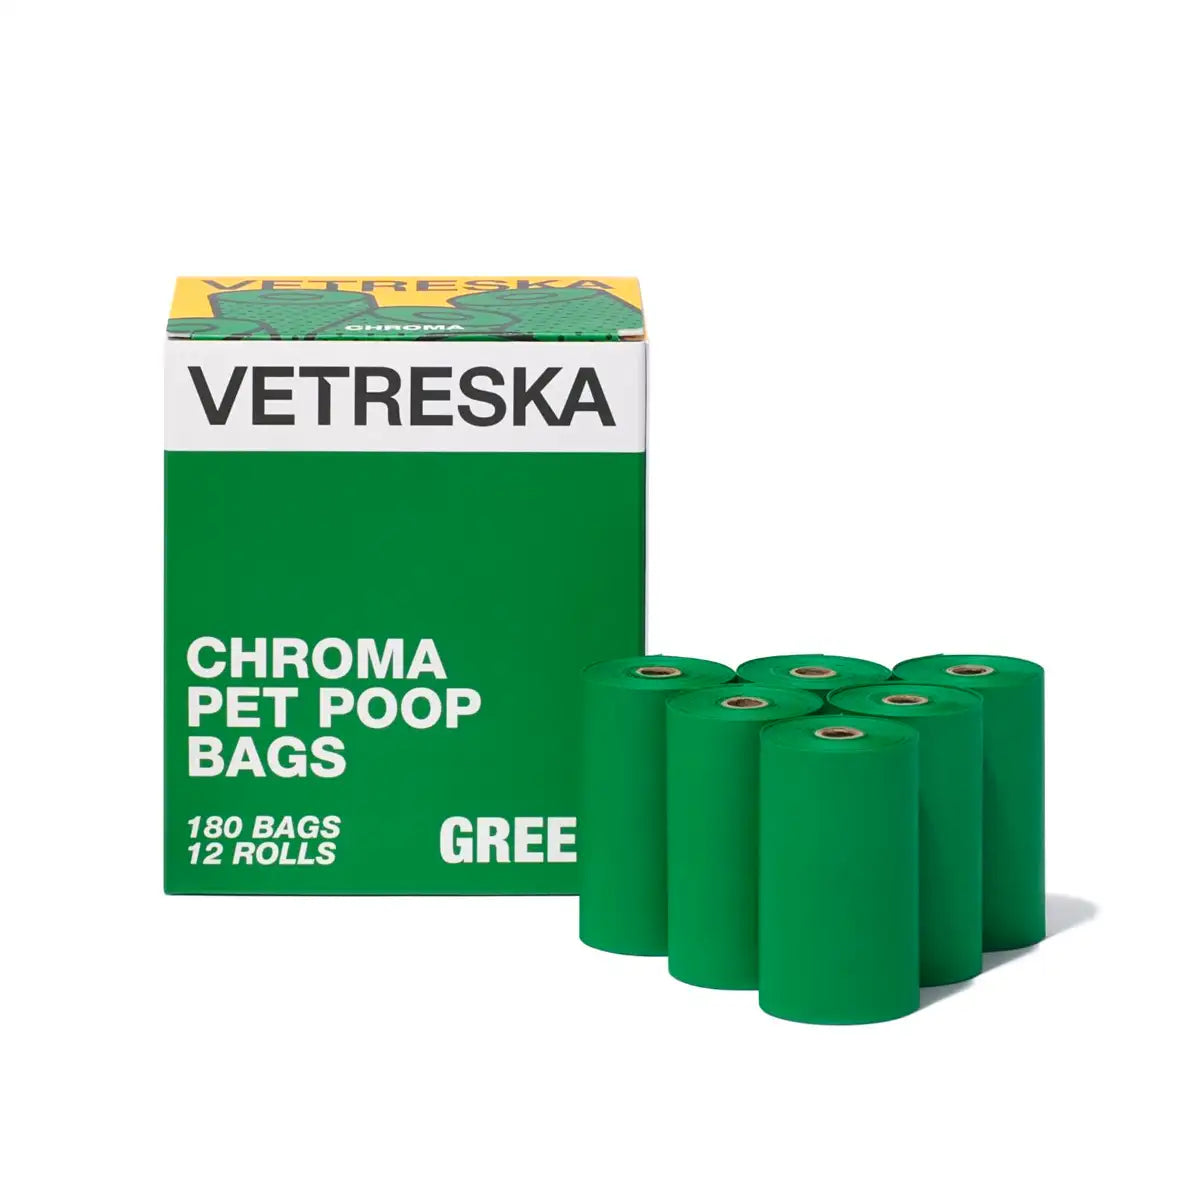 Vetreska - Chroma Pet Poop Bags (12 Rolls)